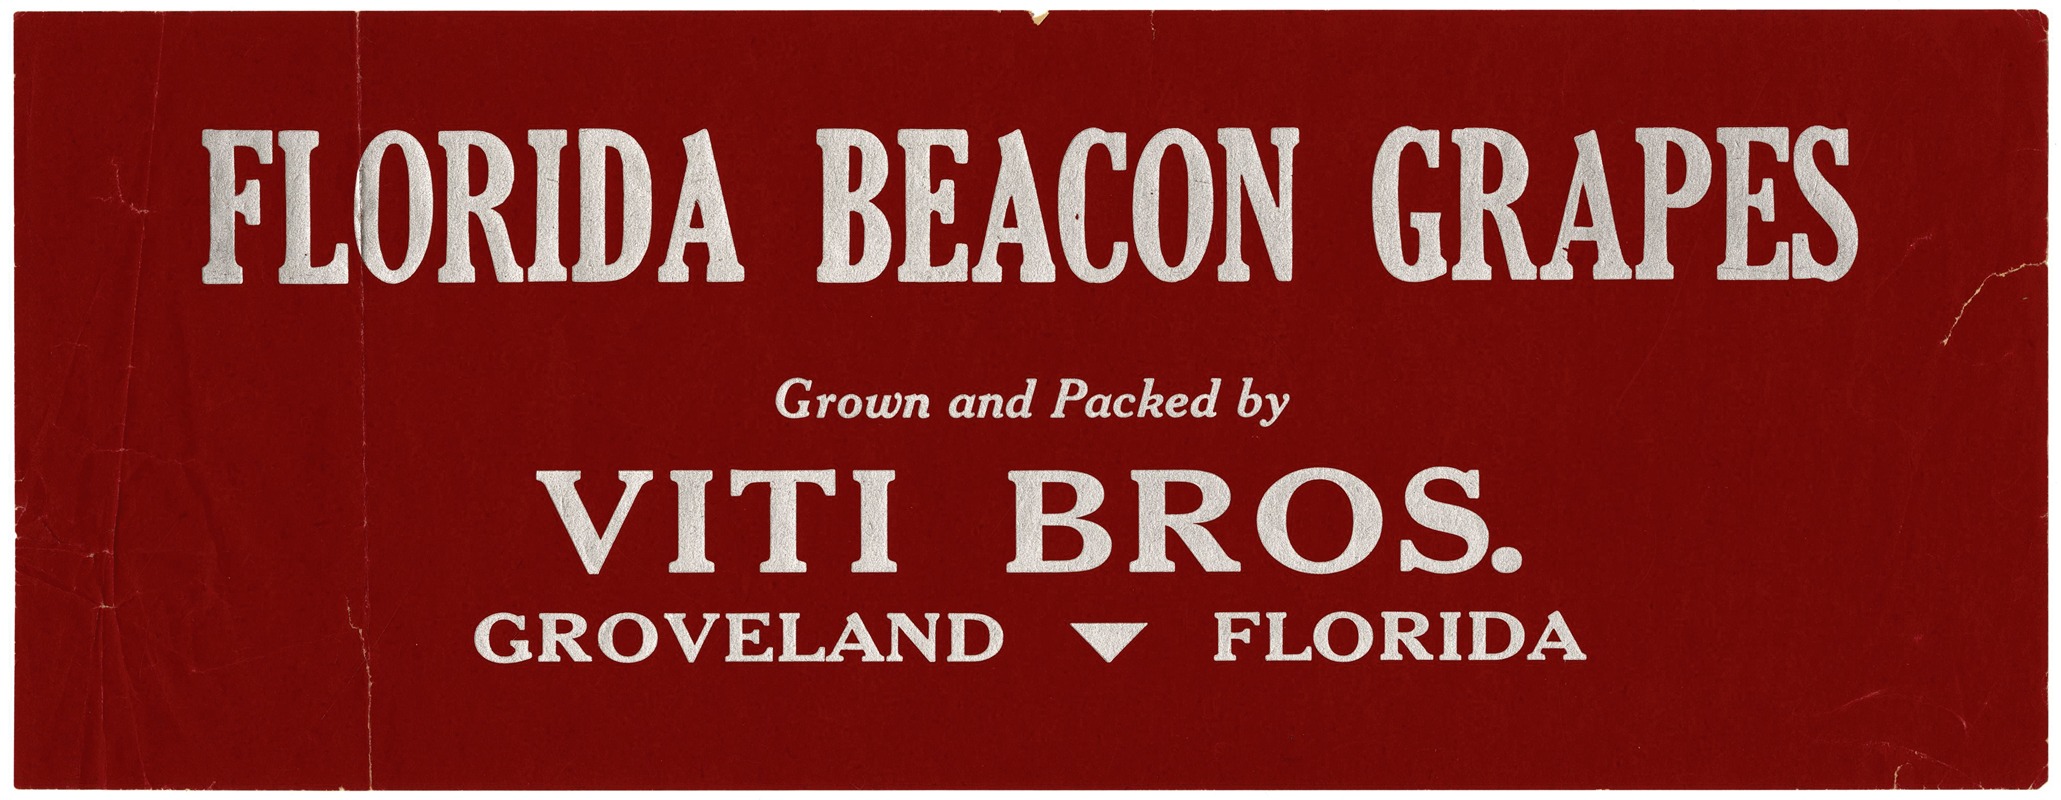 Anonymous - Florida Beacon Grapes Label